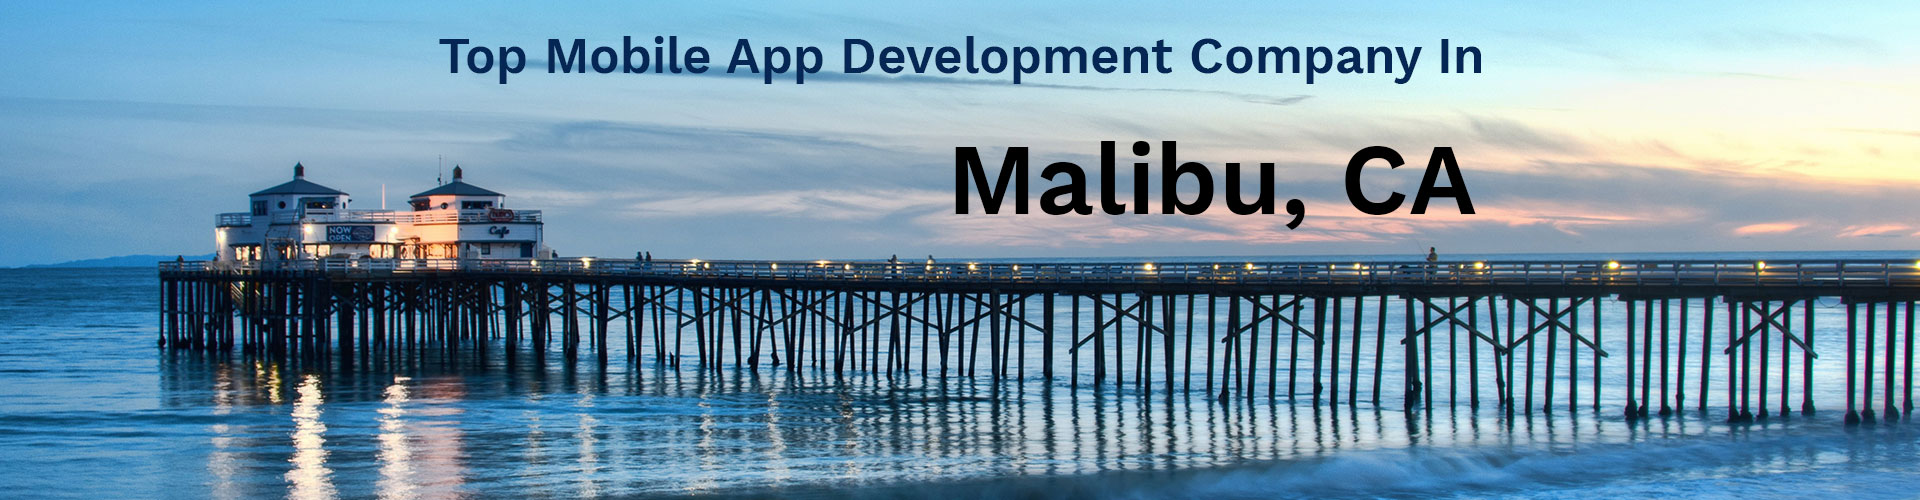 mobile app development company malibu